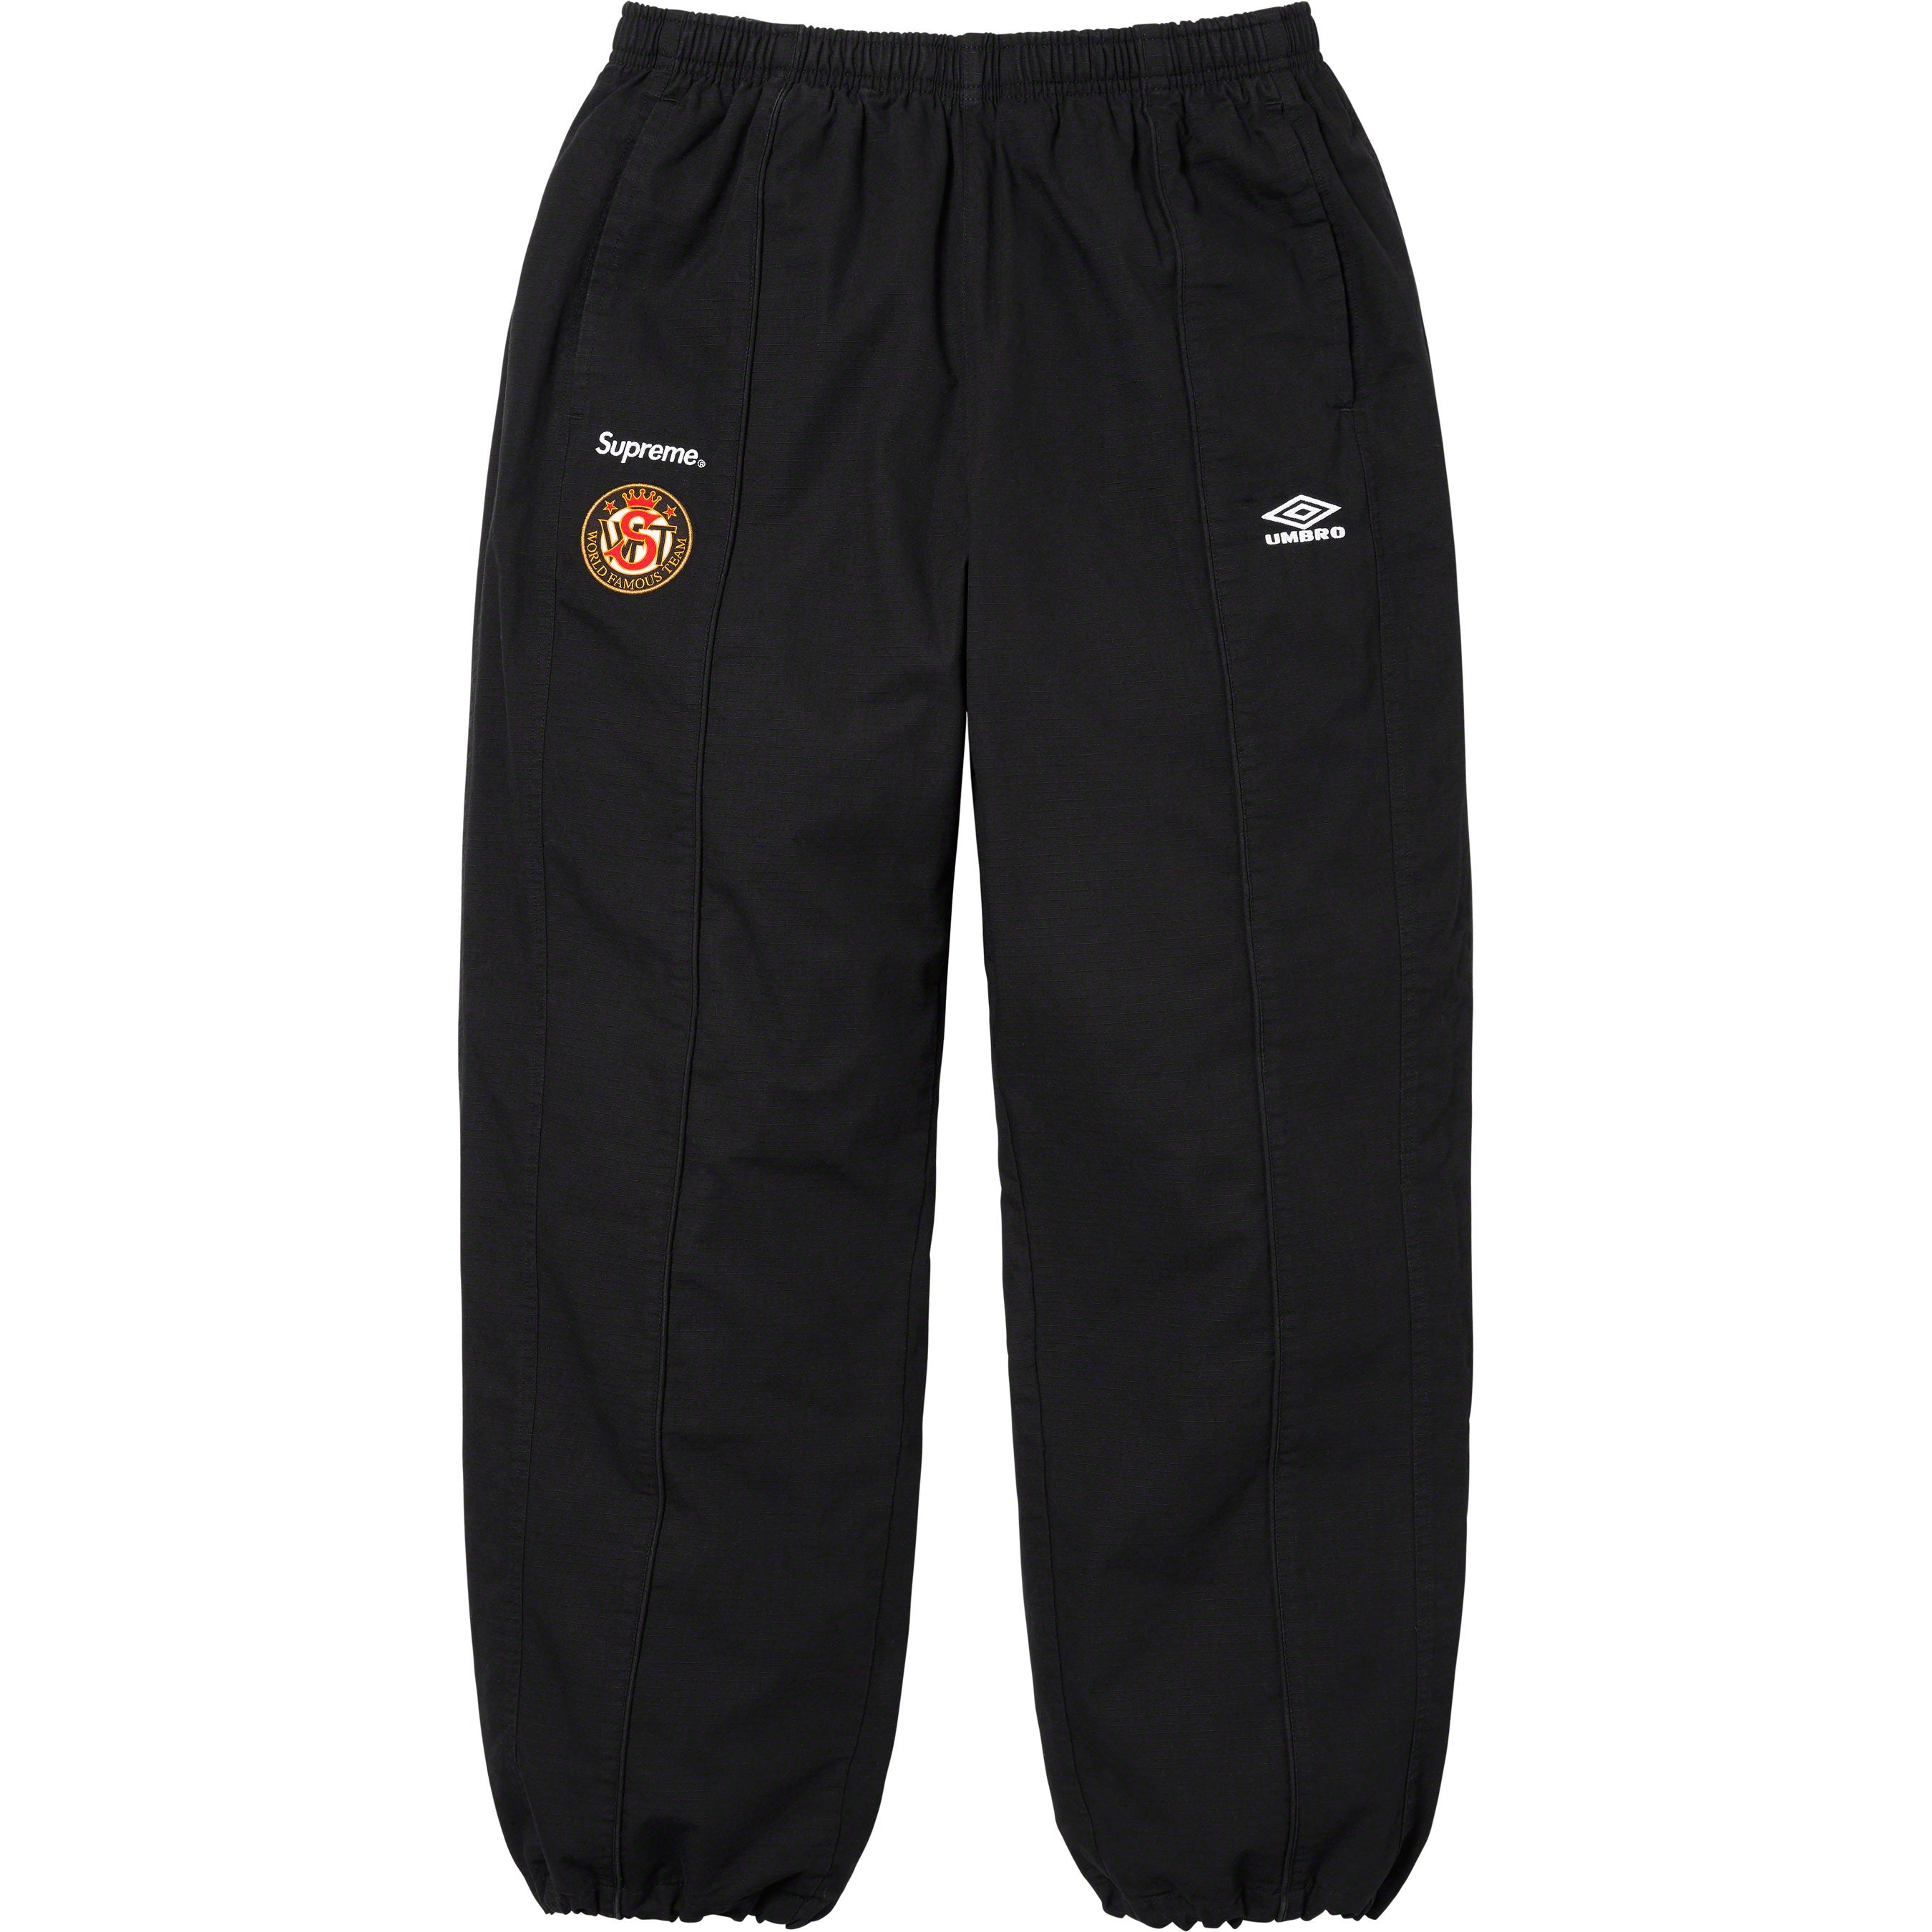 Umbro Sweatpants / Track Pants Soccer Mens Small Black White Diamond  Pattern | eBay